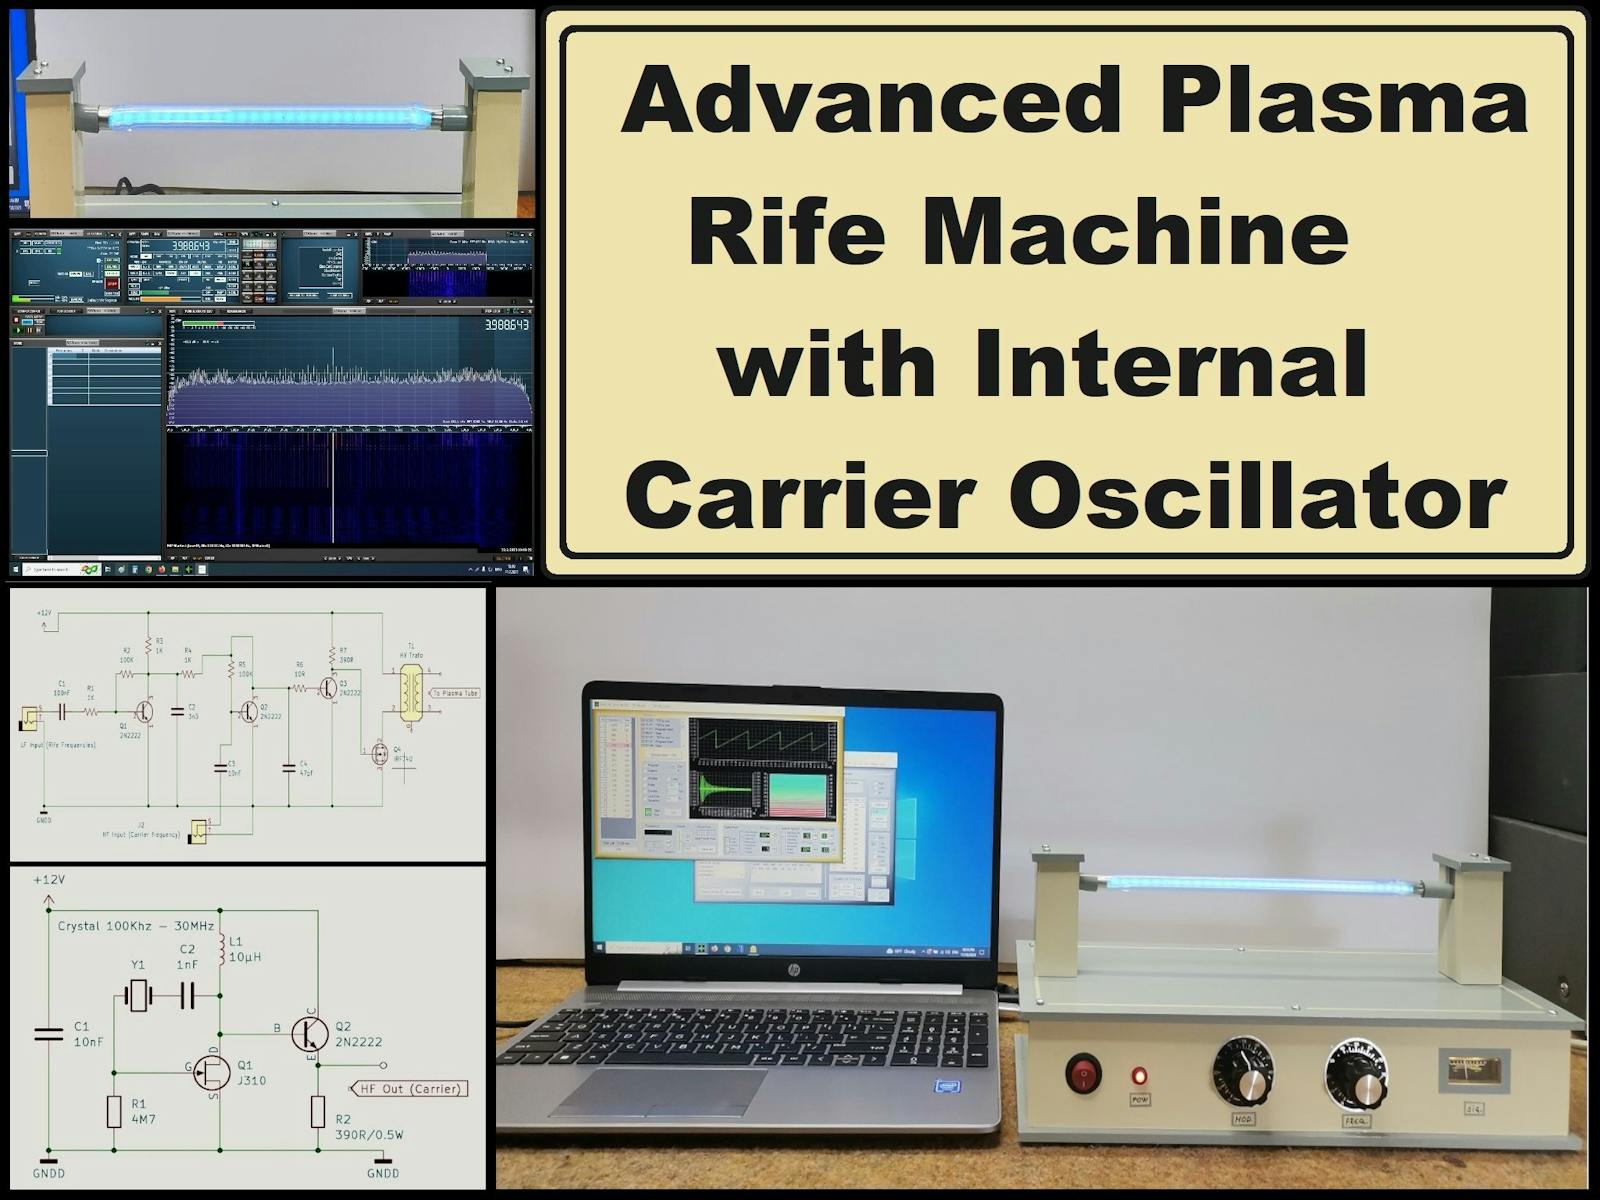 Advanced Plasma Rife Machine with internal Carrier Oscillator